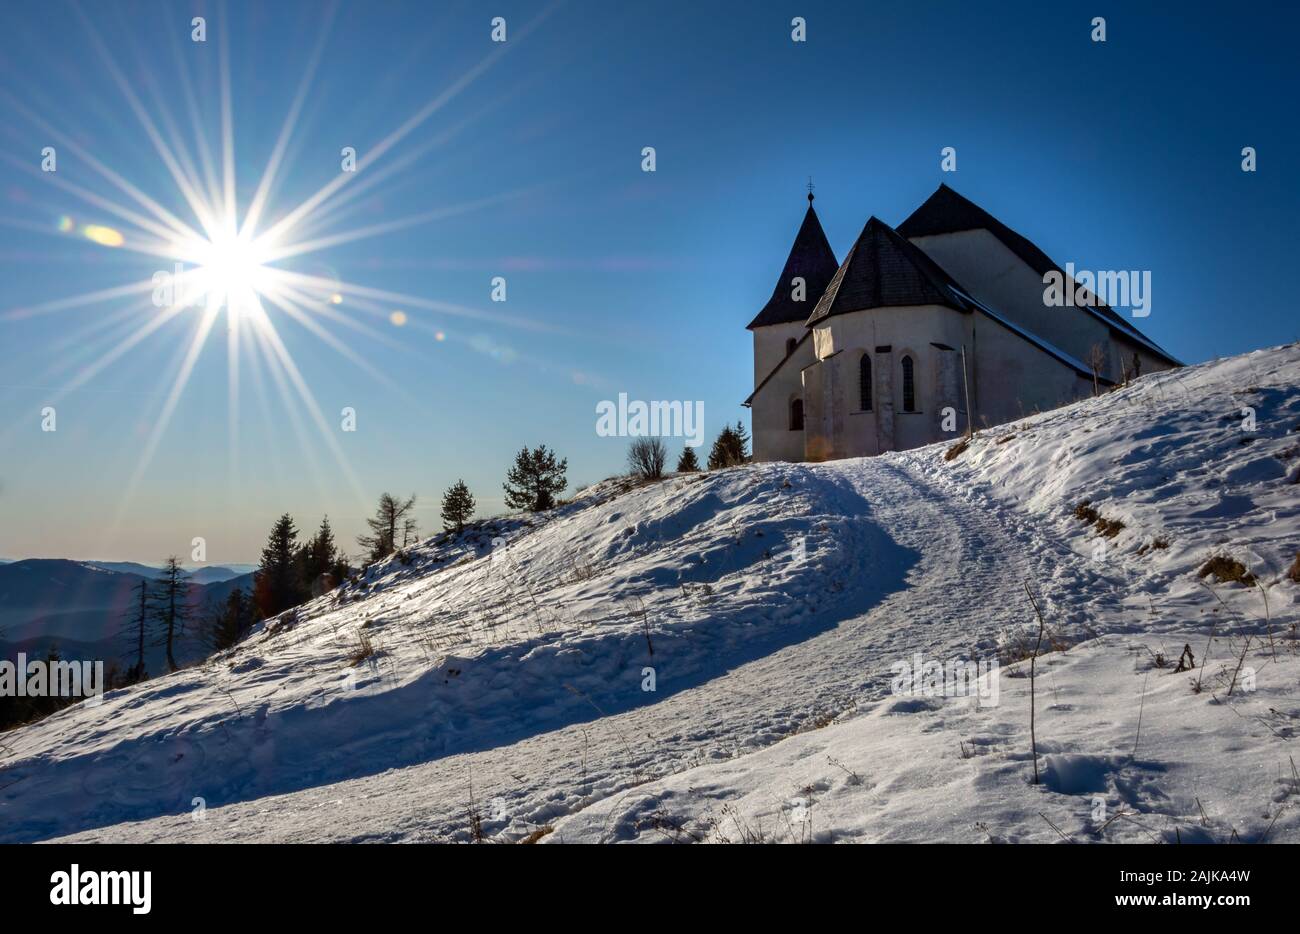 Uršlja gora, Slovenia - January 2, 2020;  Peak Uršlja gora in Slovenia with church St. Uršula. A lonely peak in the heart of Koroška region. Stock Photo